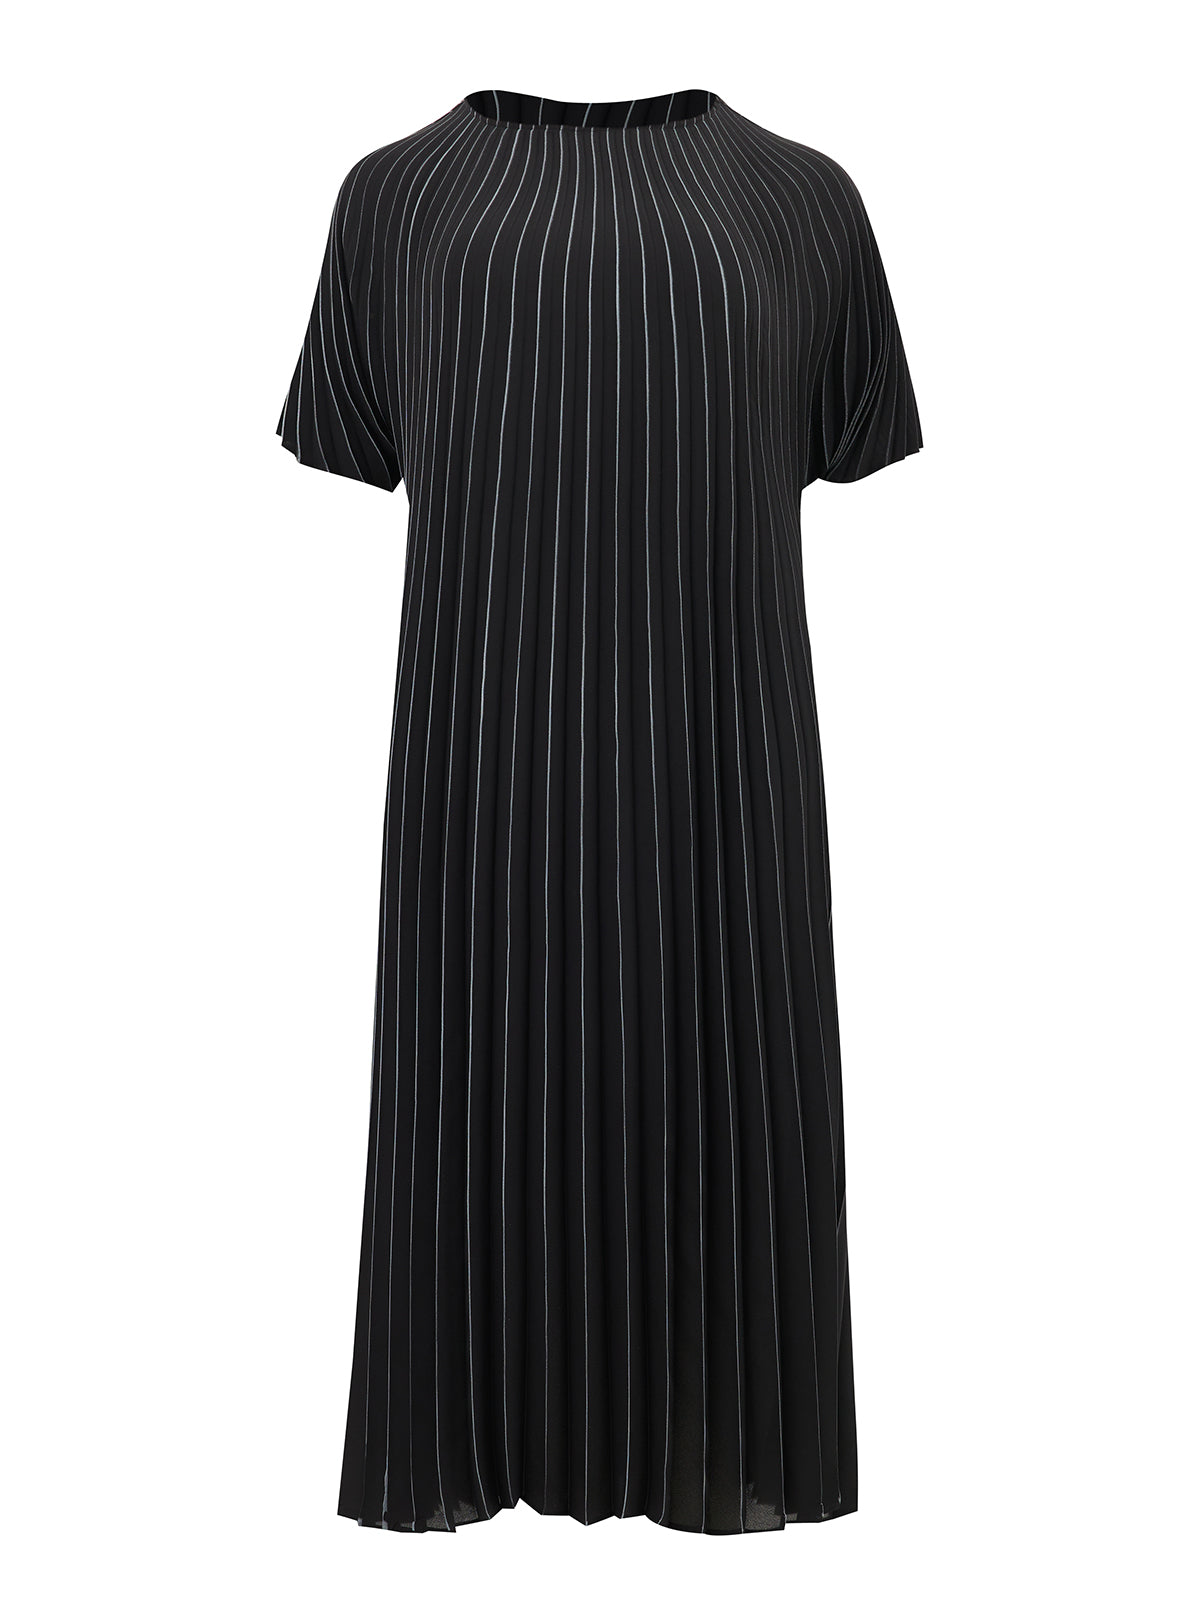 Mat Pin Stripe Black Dress